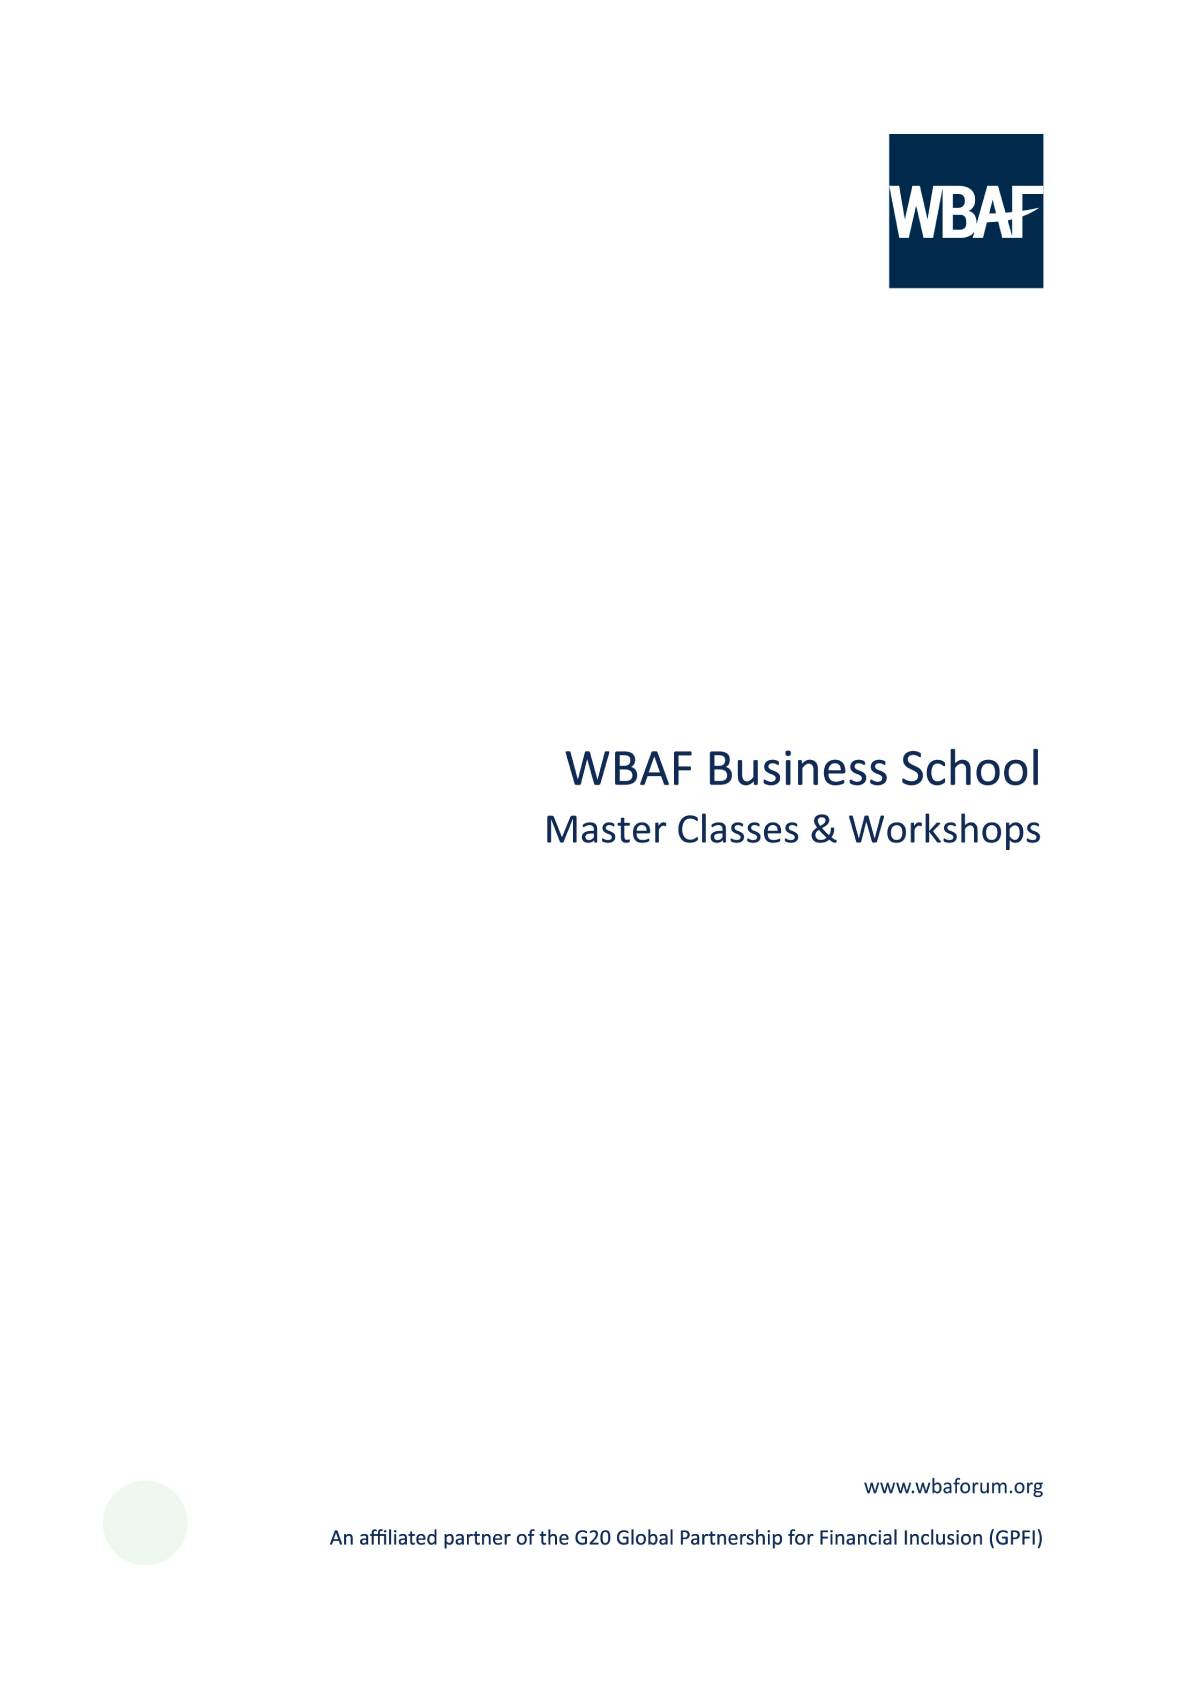 Wbaf Business School - Master Classes